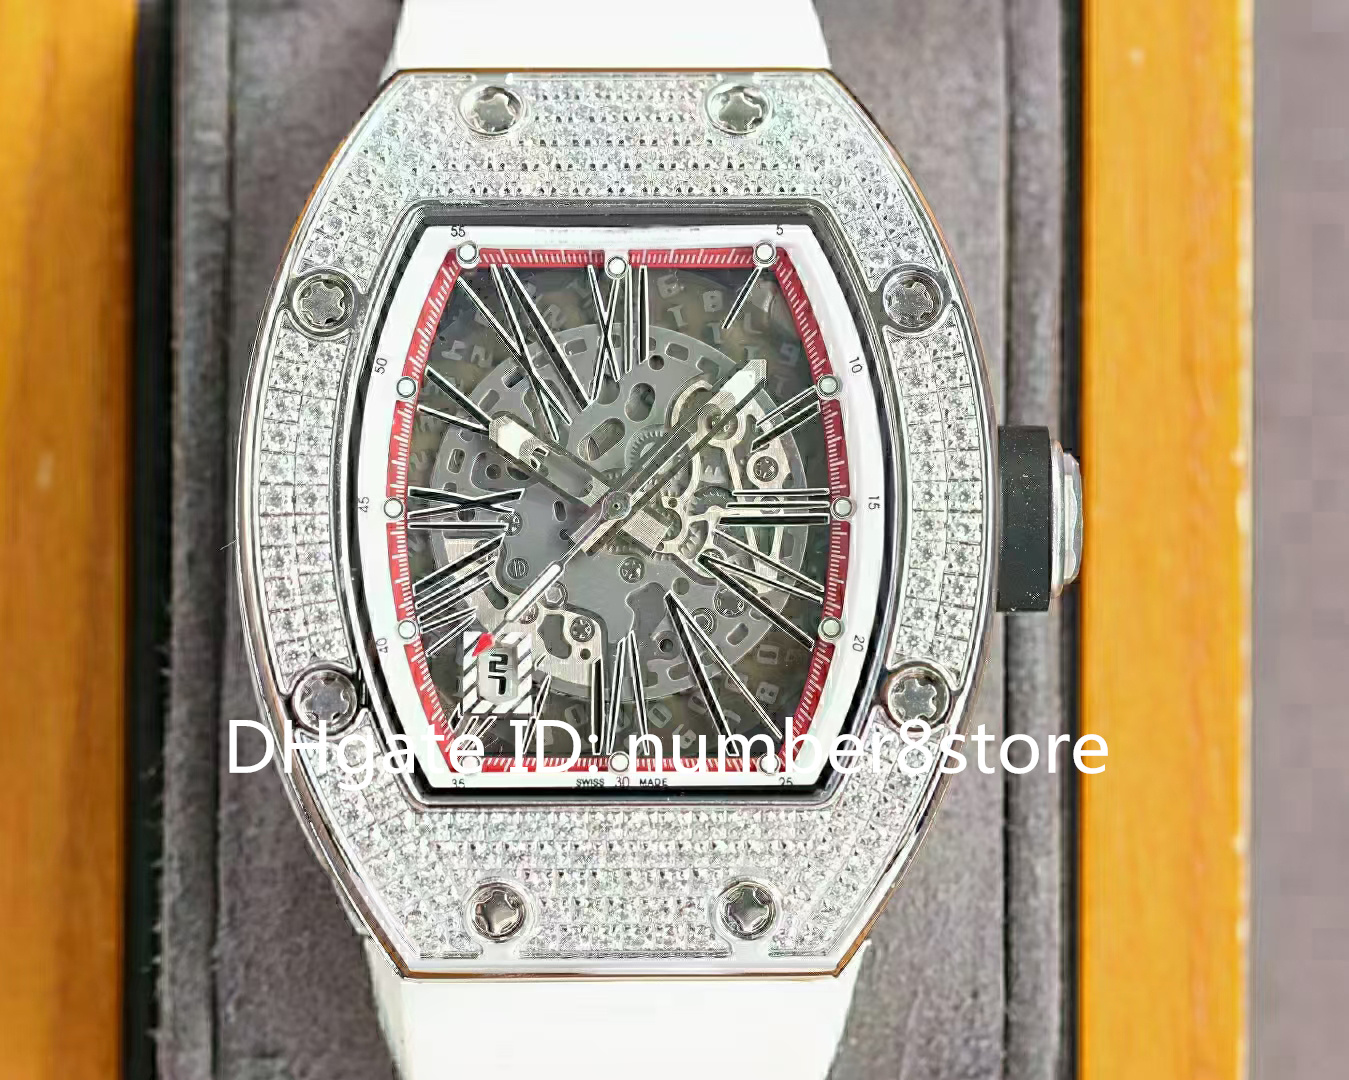 RM010 다이아몬드 럭셔리 남성 시계 시계 18K 로즈 골드 톤 스포츠 손목 시계 스위스 자동 기계식 오픈 워크 다이얼 사파이어 크리스탈 방수 시계